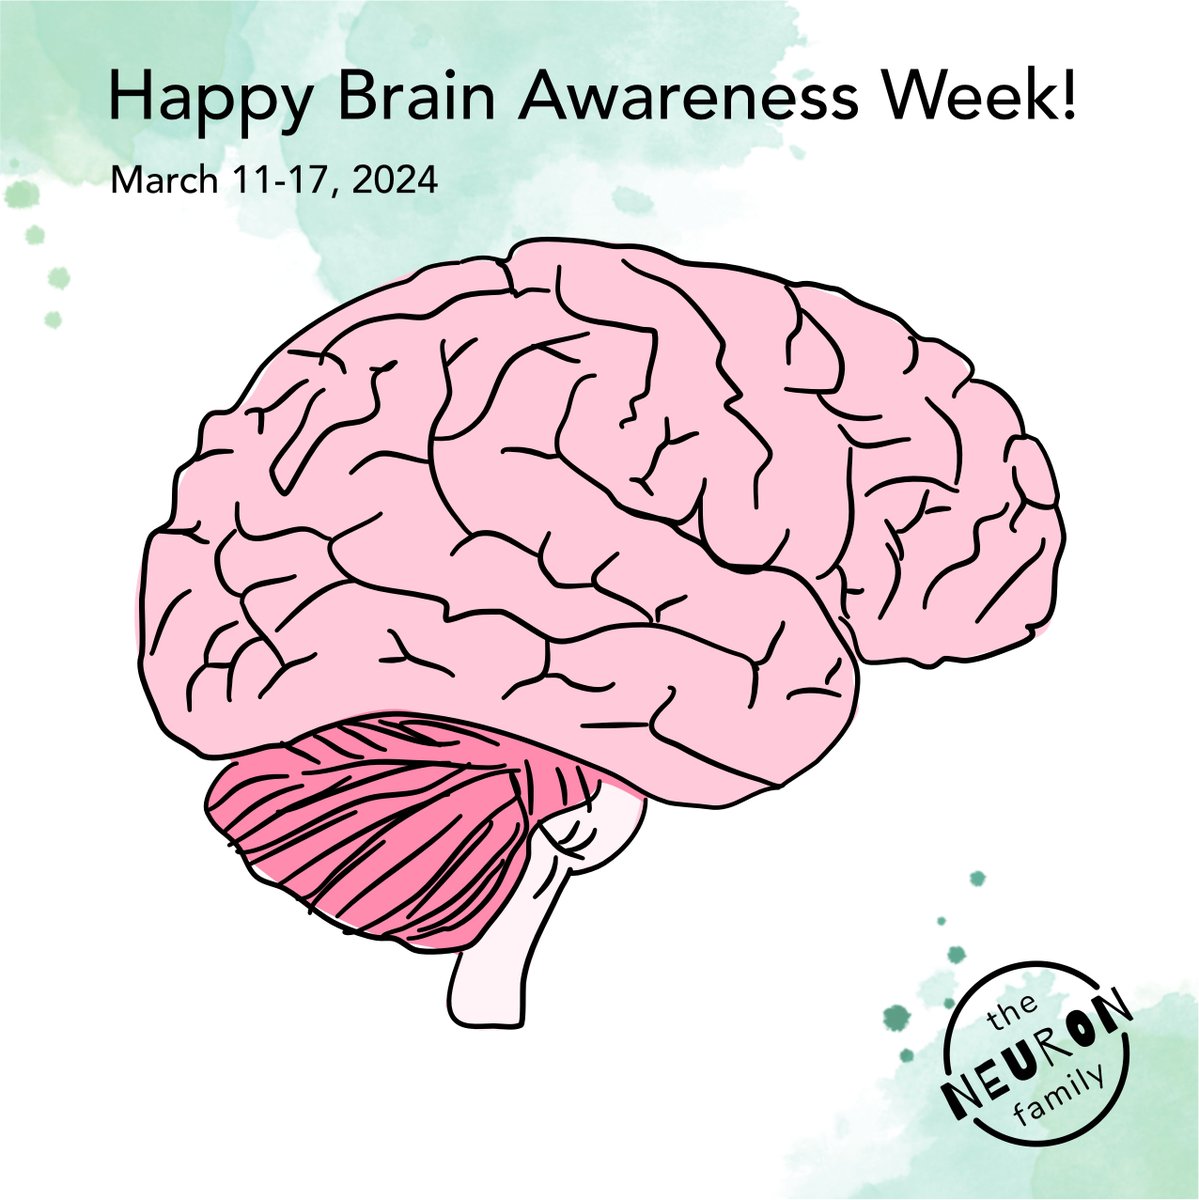 Happy Brain Awareness Week from our family to yours! 🧠💕

#BrainAwarenessWeek #neurotwitter